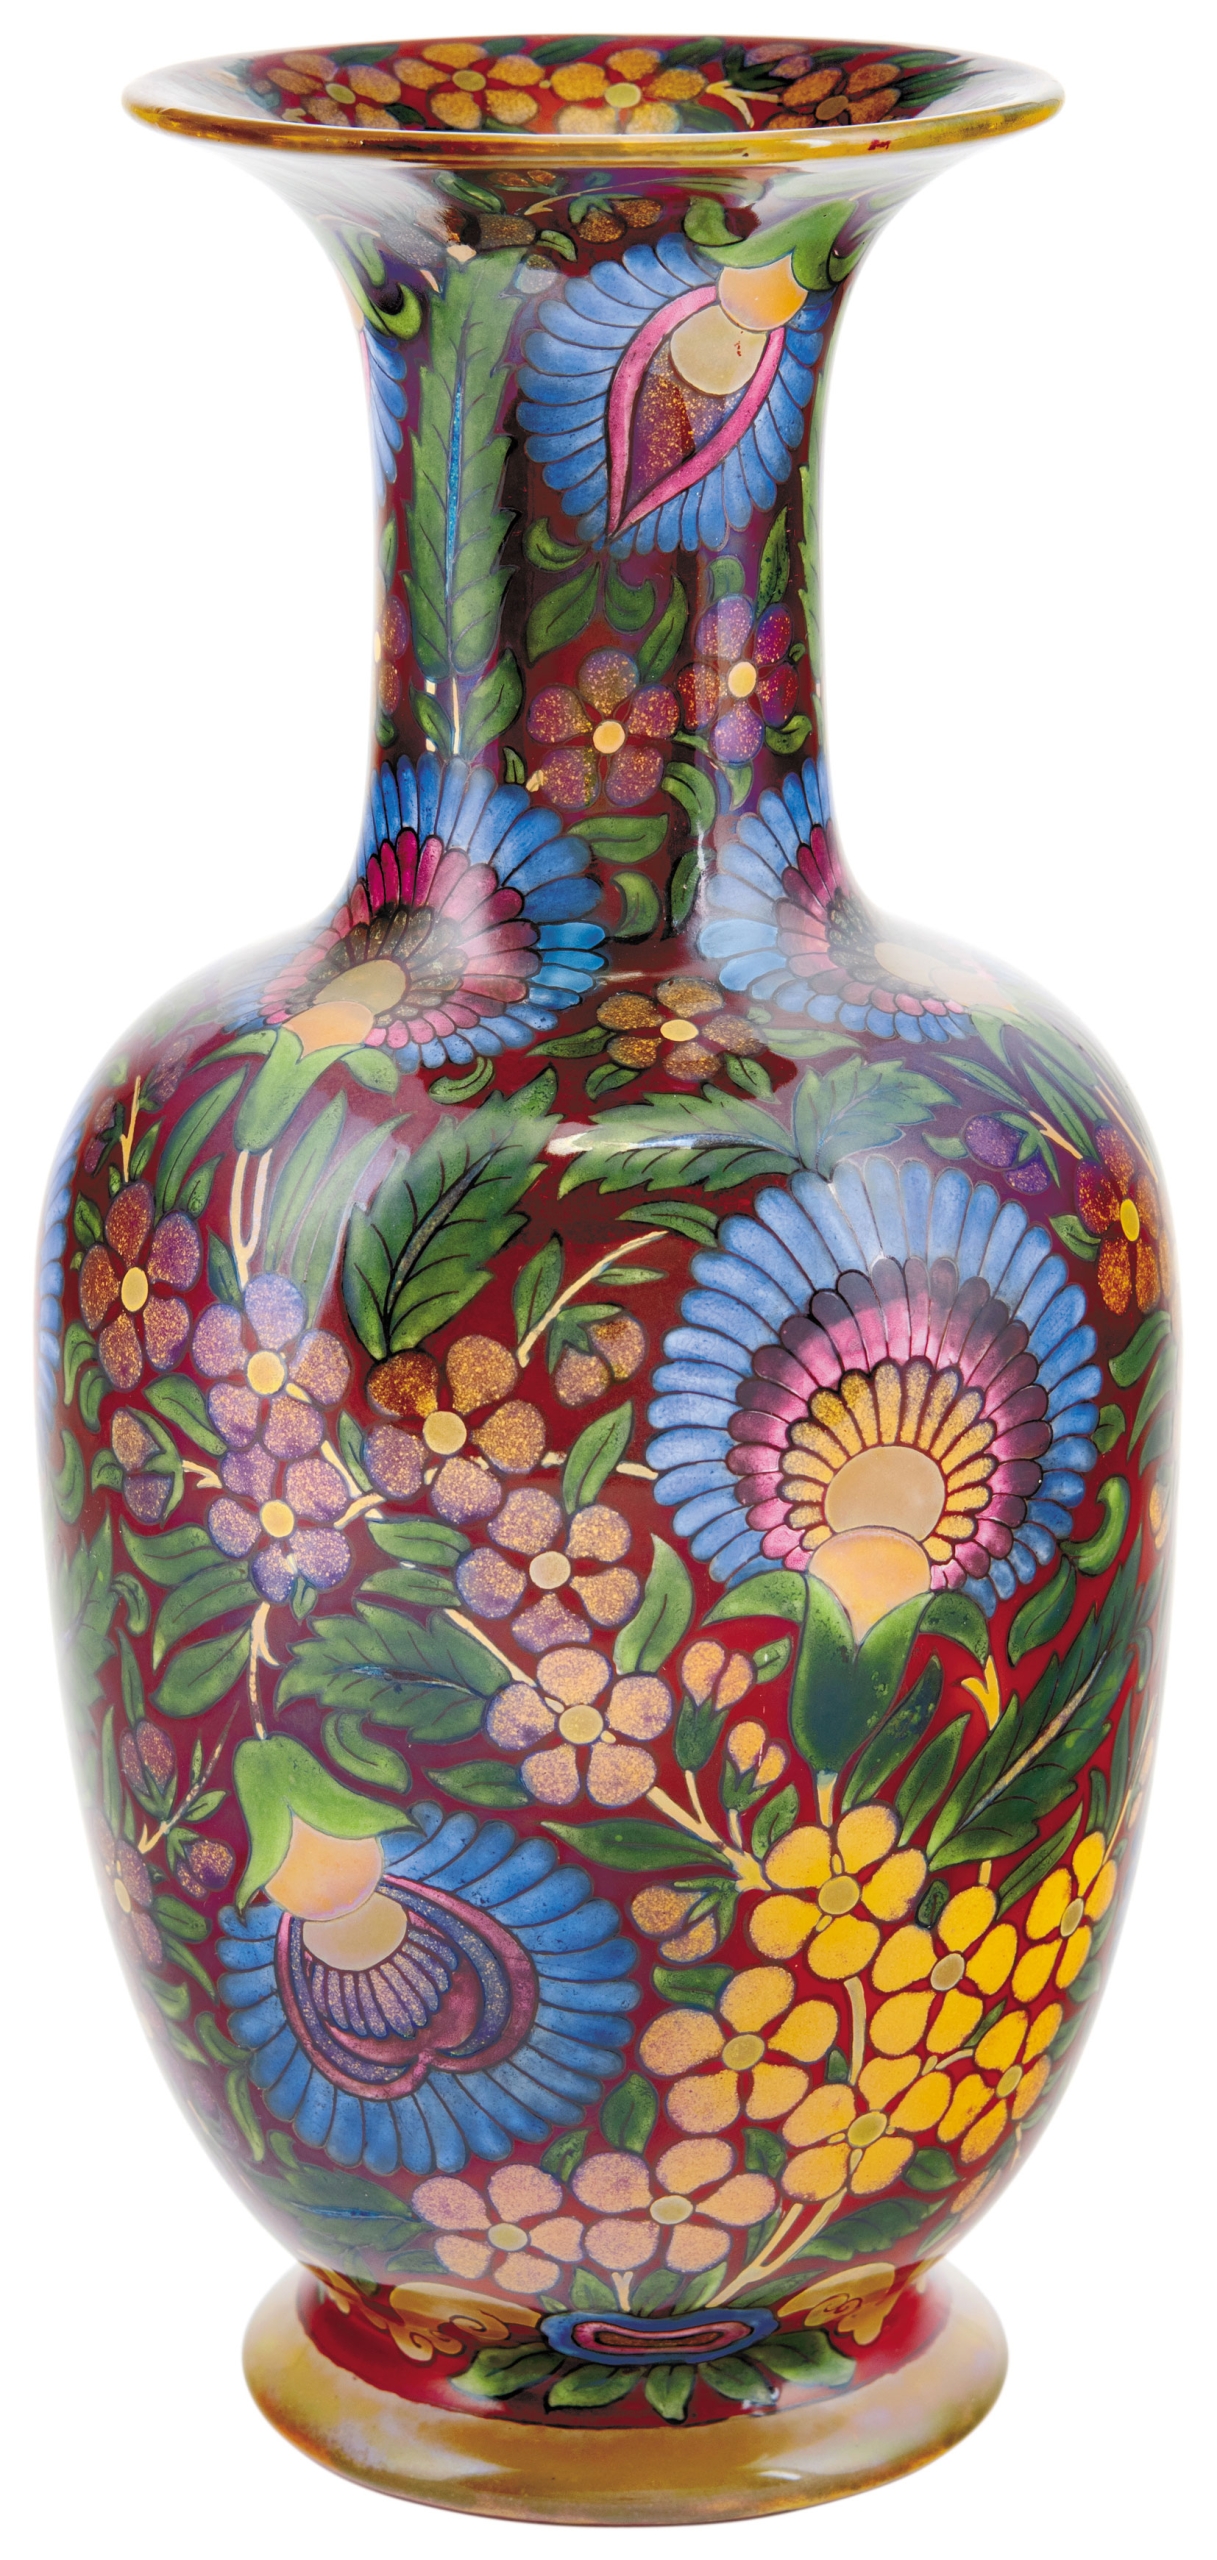 Zsolnay Vase with “Egyptian” Floral Motif, around 1915, DECOR PLAN BY: POMPÁR GYULA